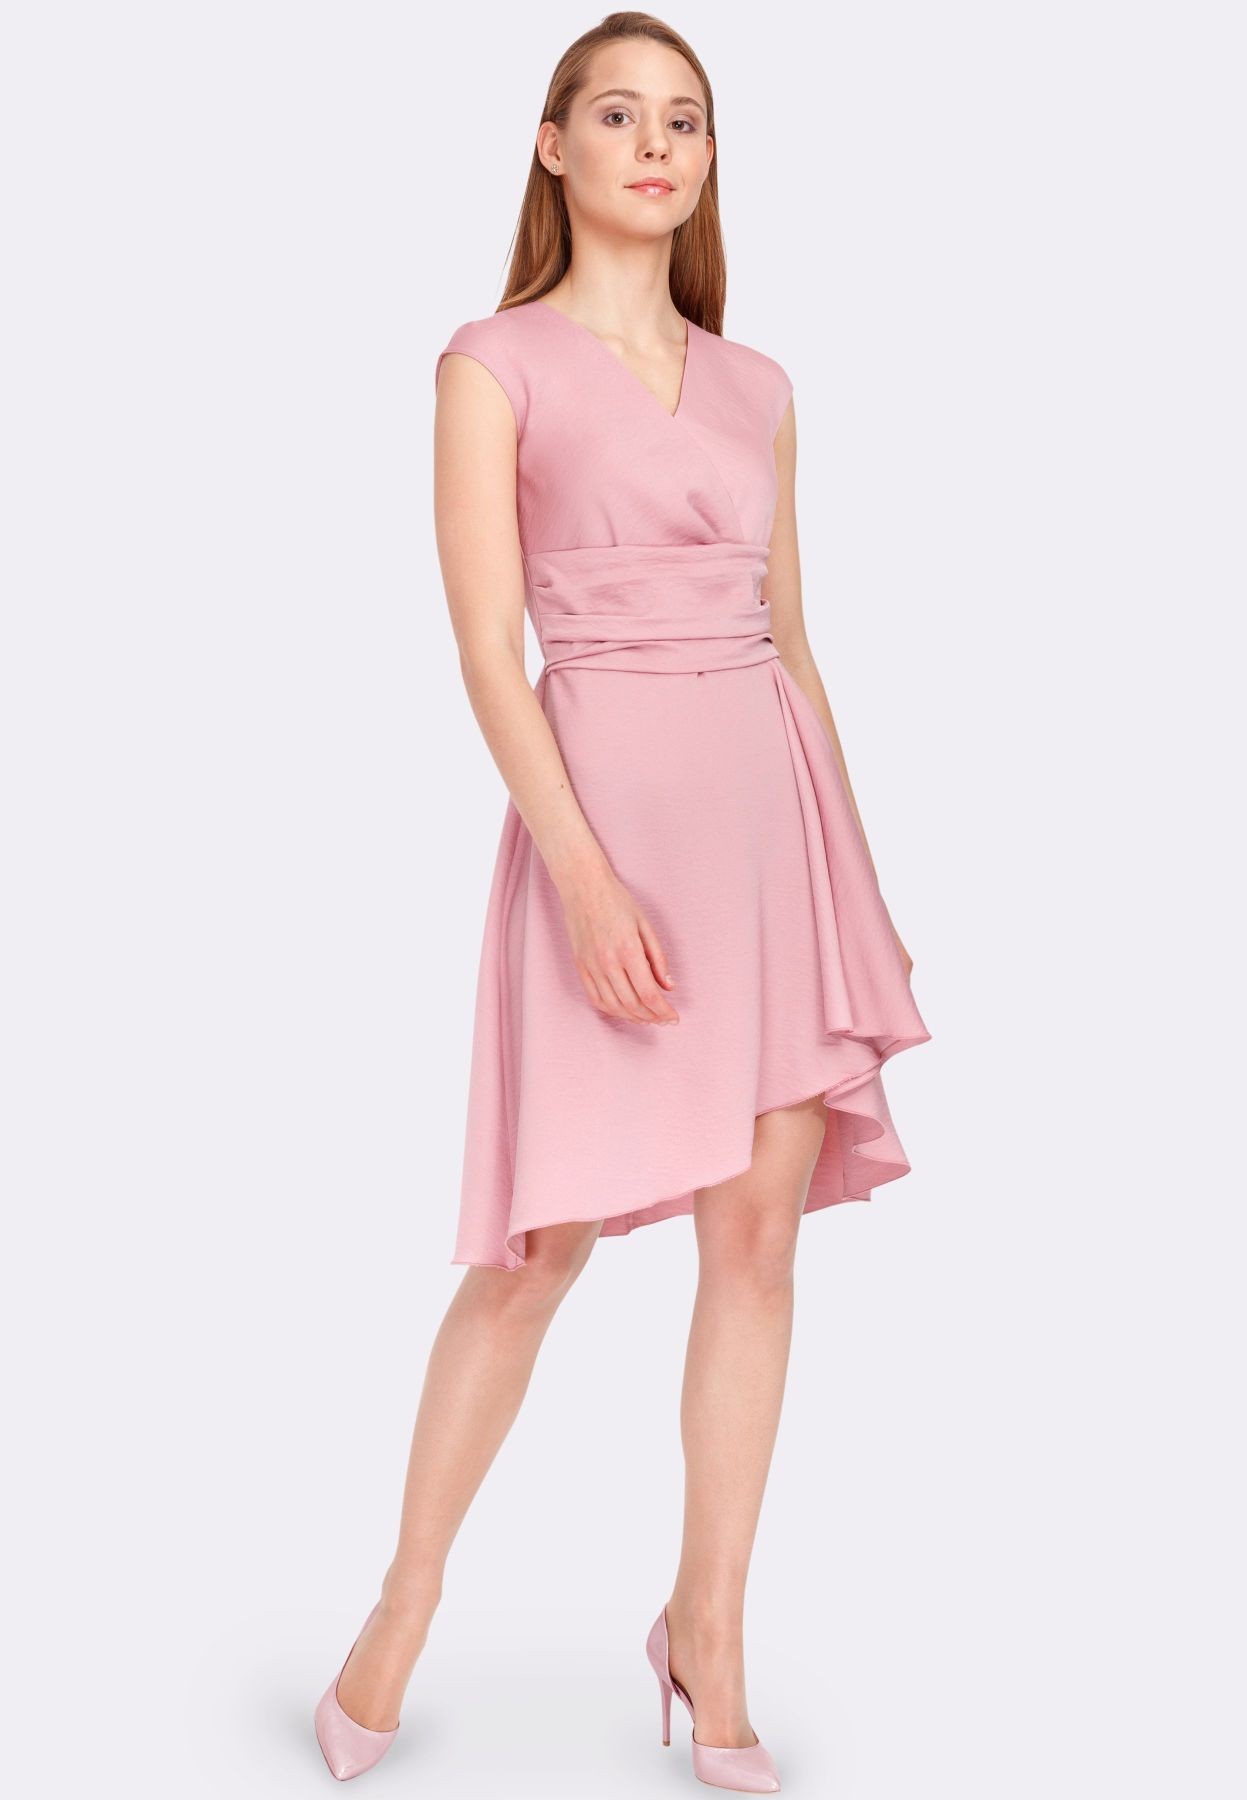 Soft pink dress with asymmetric skirt 5586p